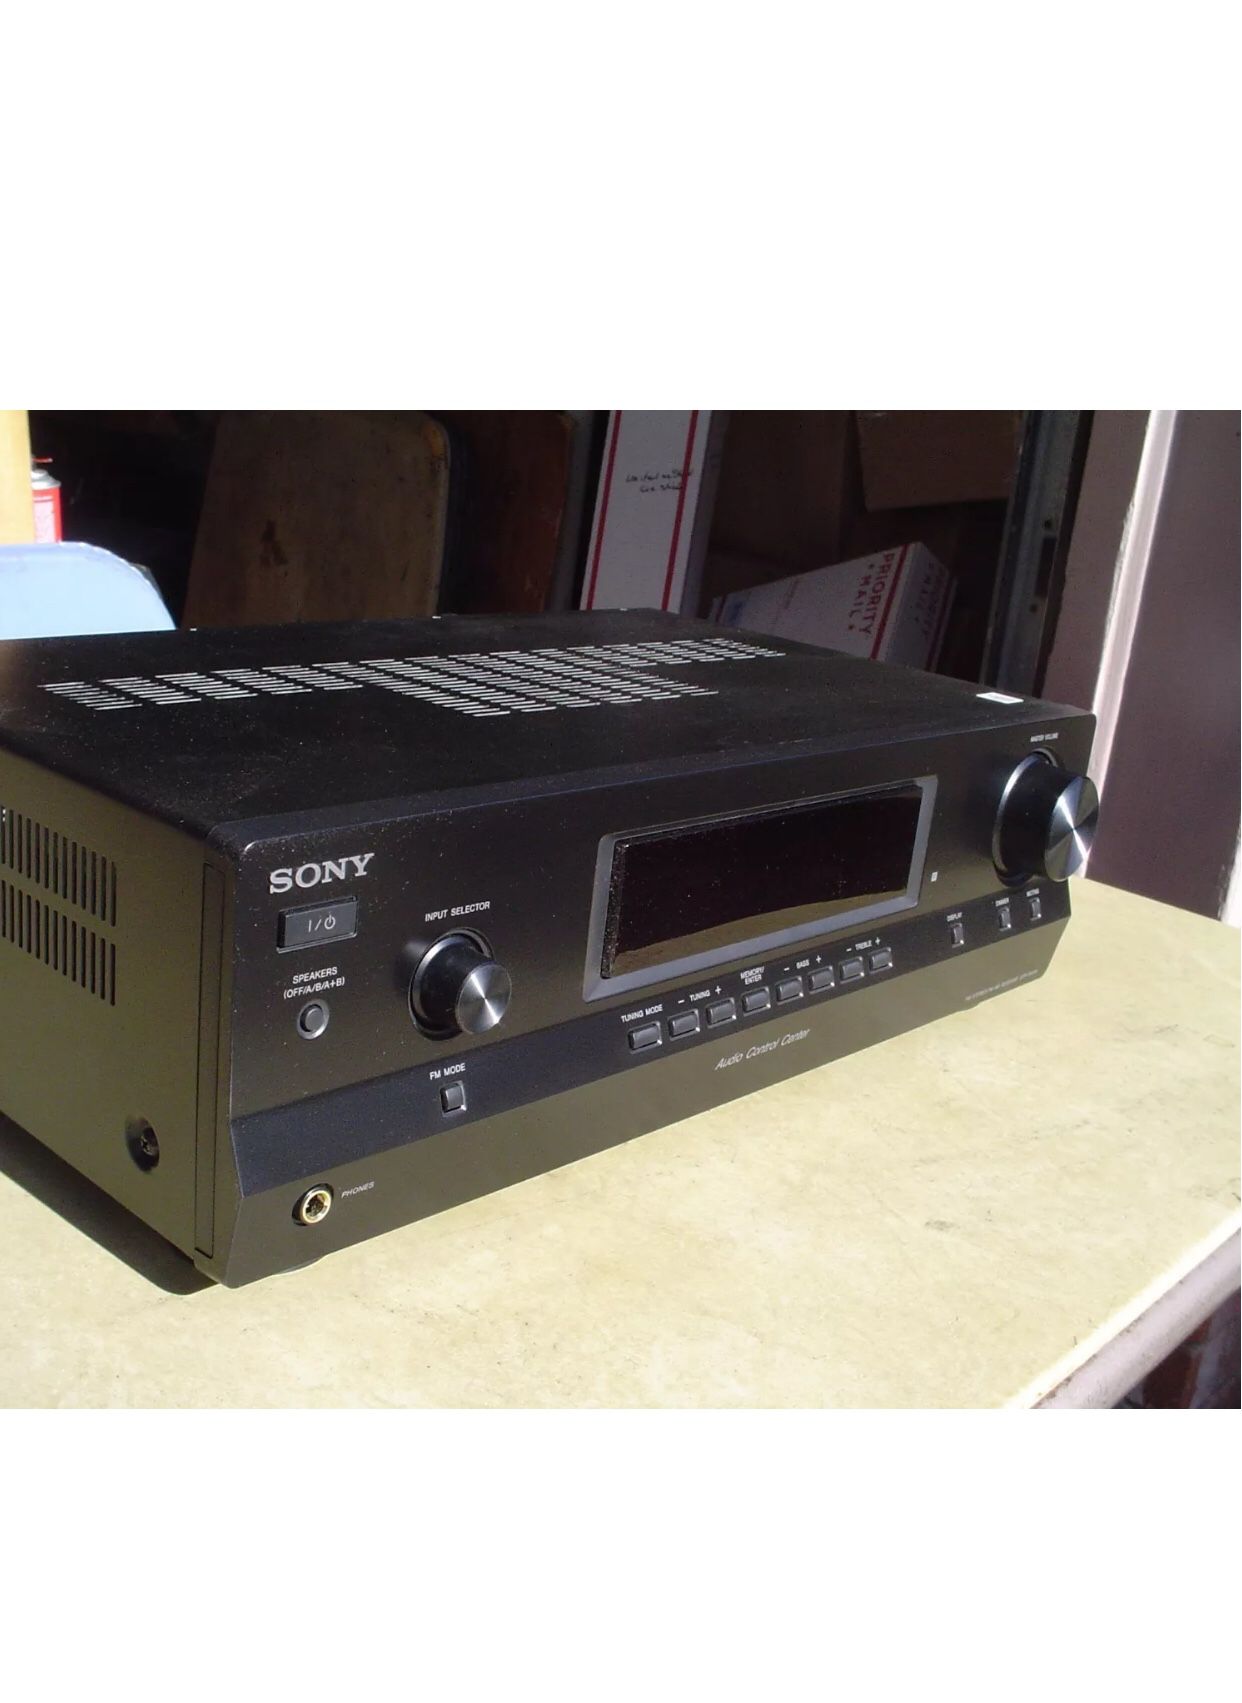 Sony STR-DH130 2 Ch 100W Stereo Receiver w/Manual